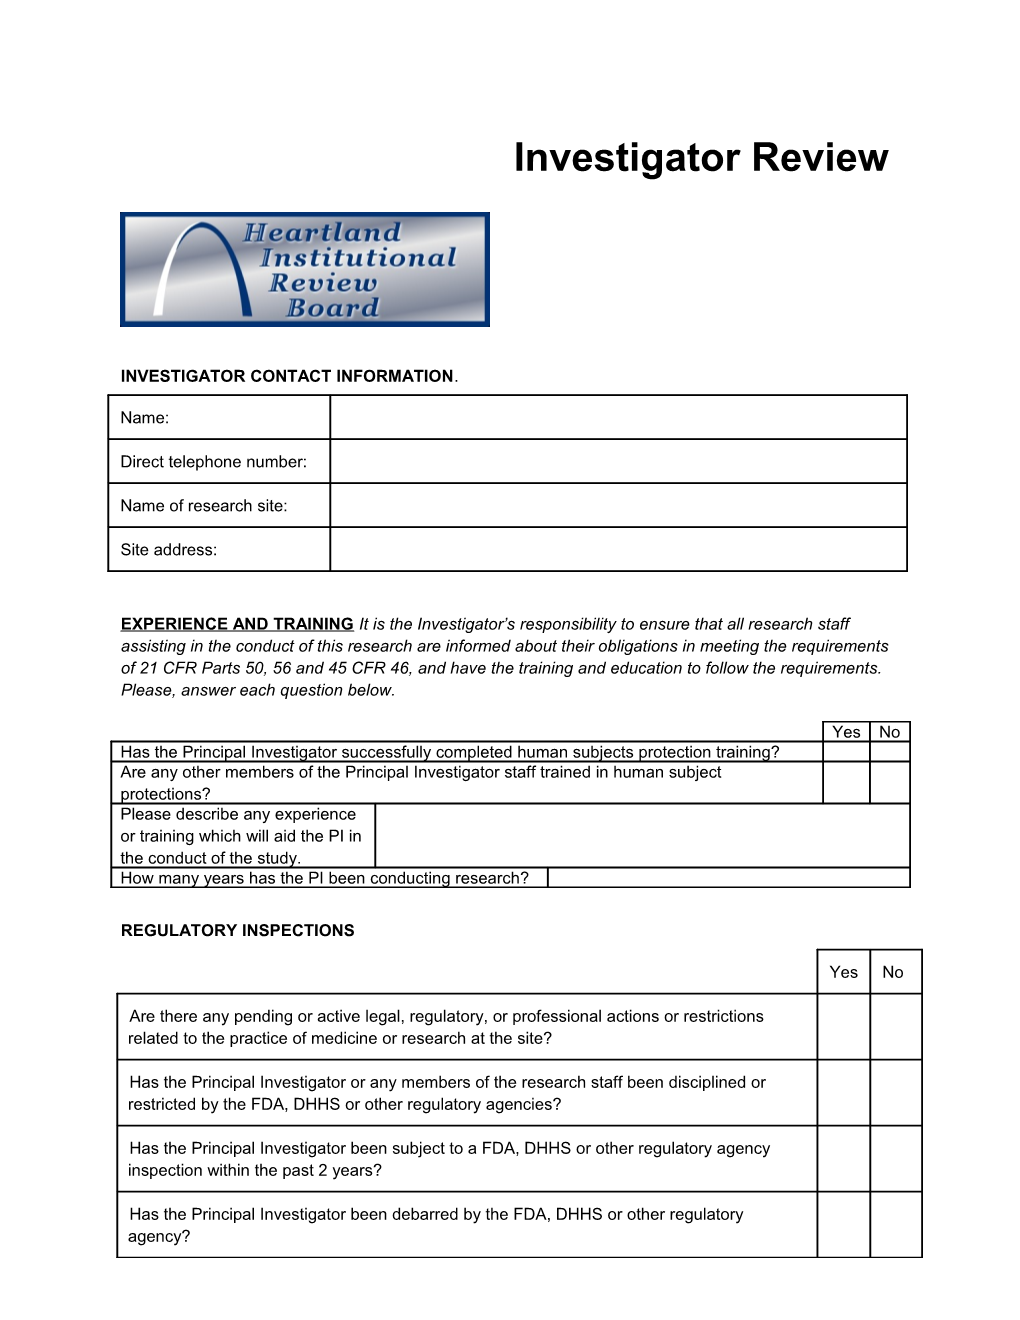 Investigator Contact Information